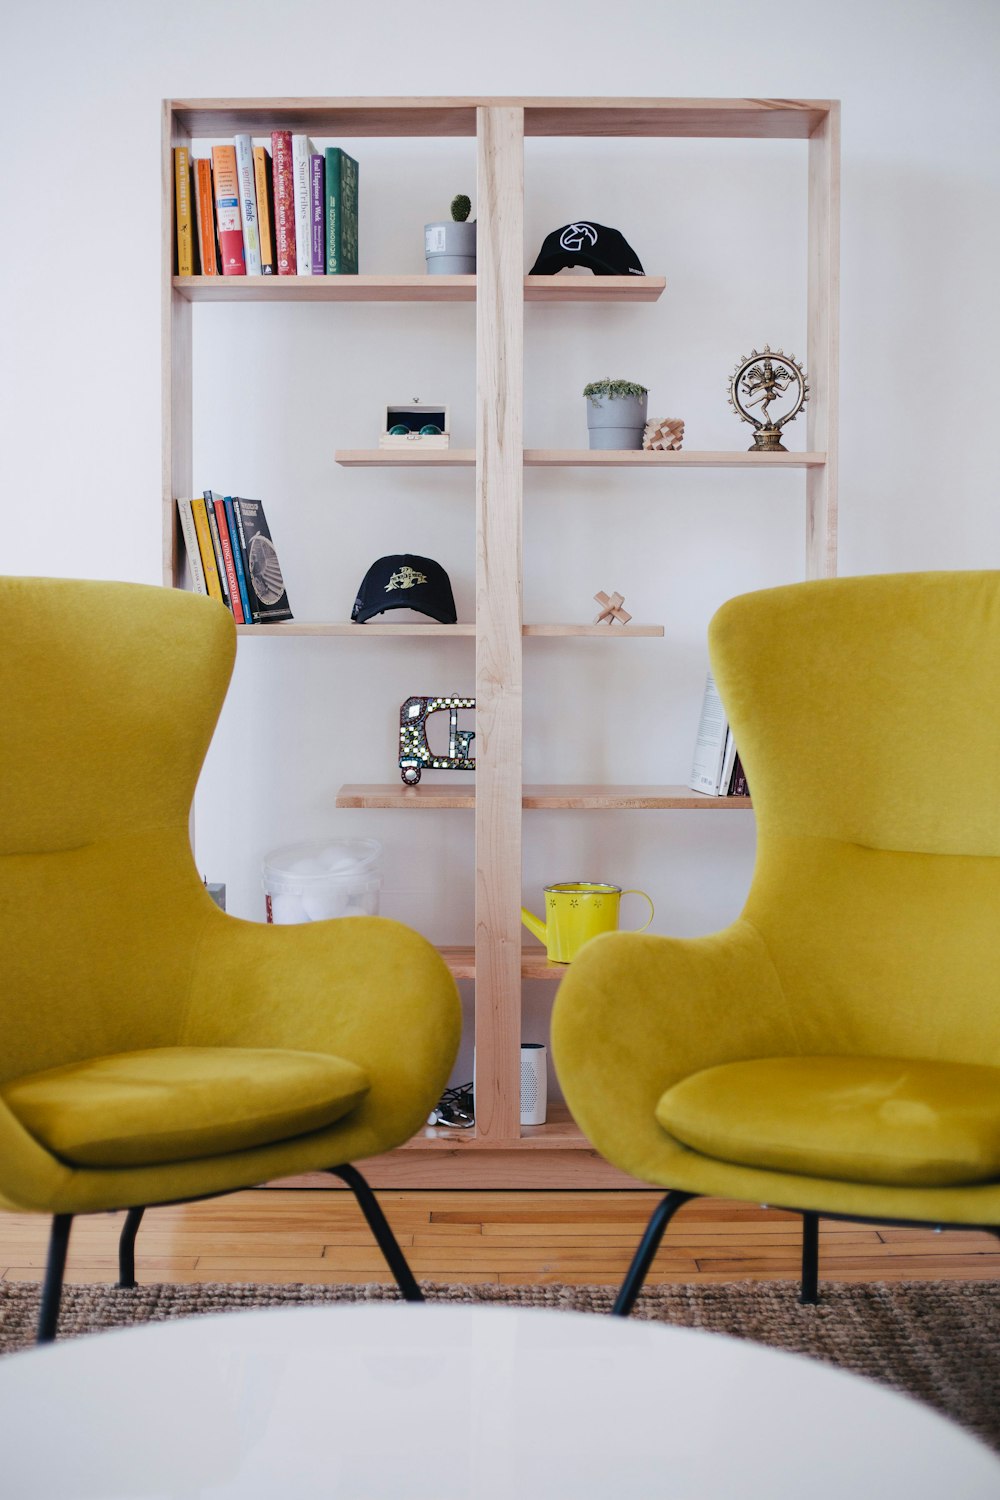 two yellow chairs near brown shelf